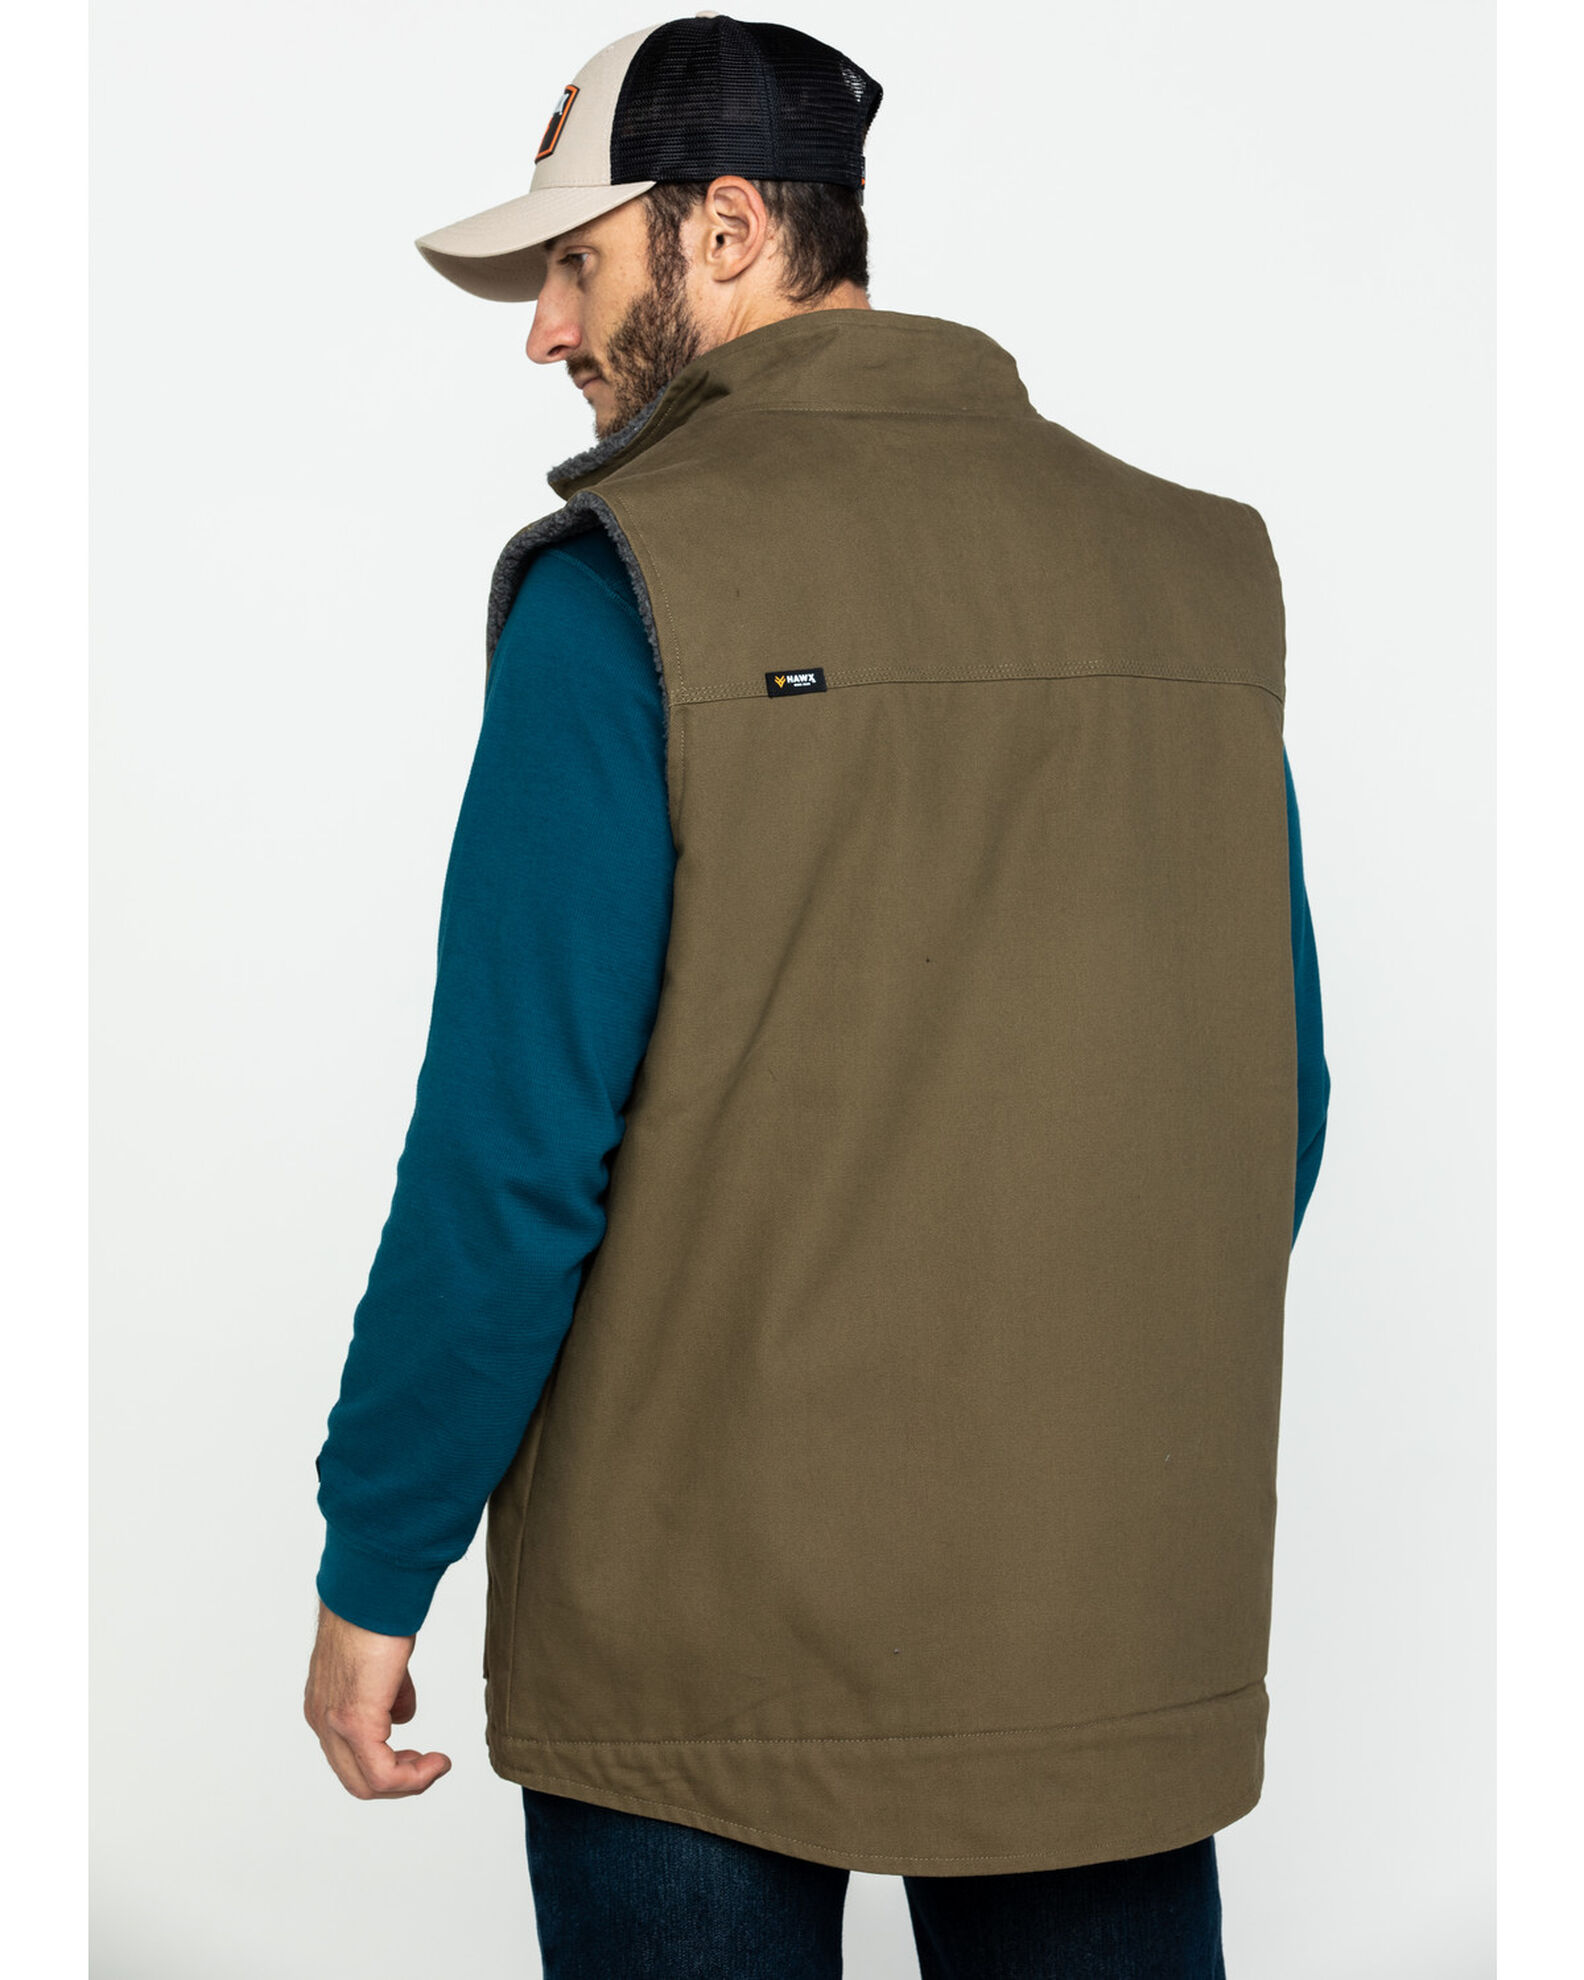 Hawx Men's Olive Canvas Sherpa Lined Work Vest